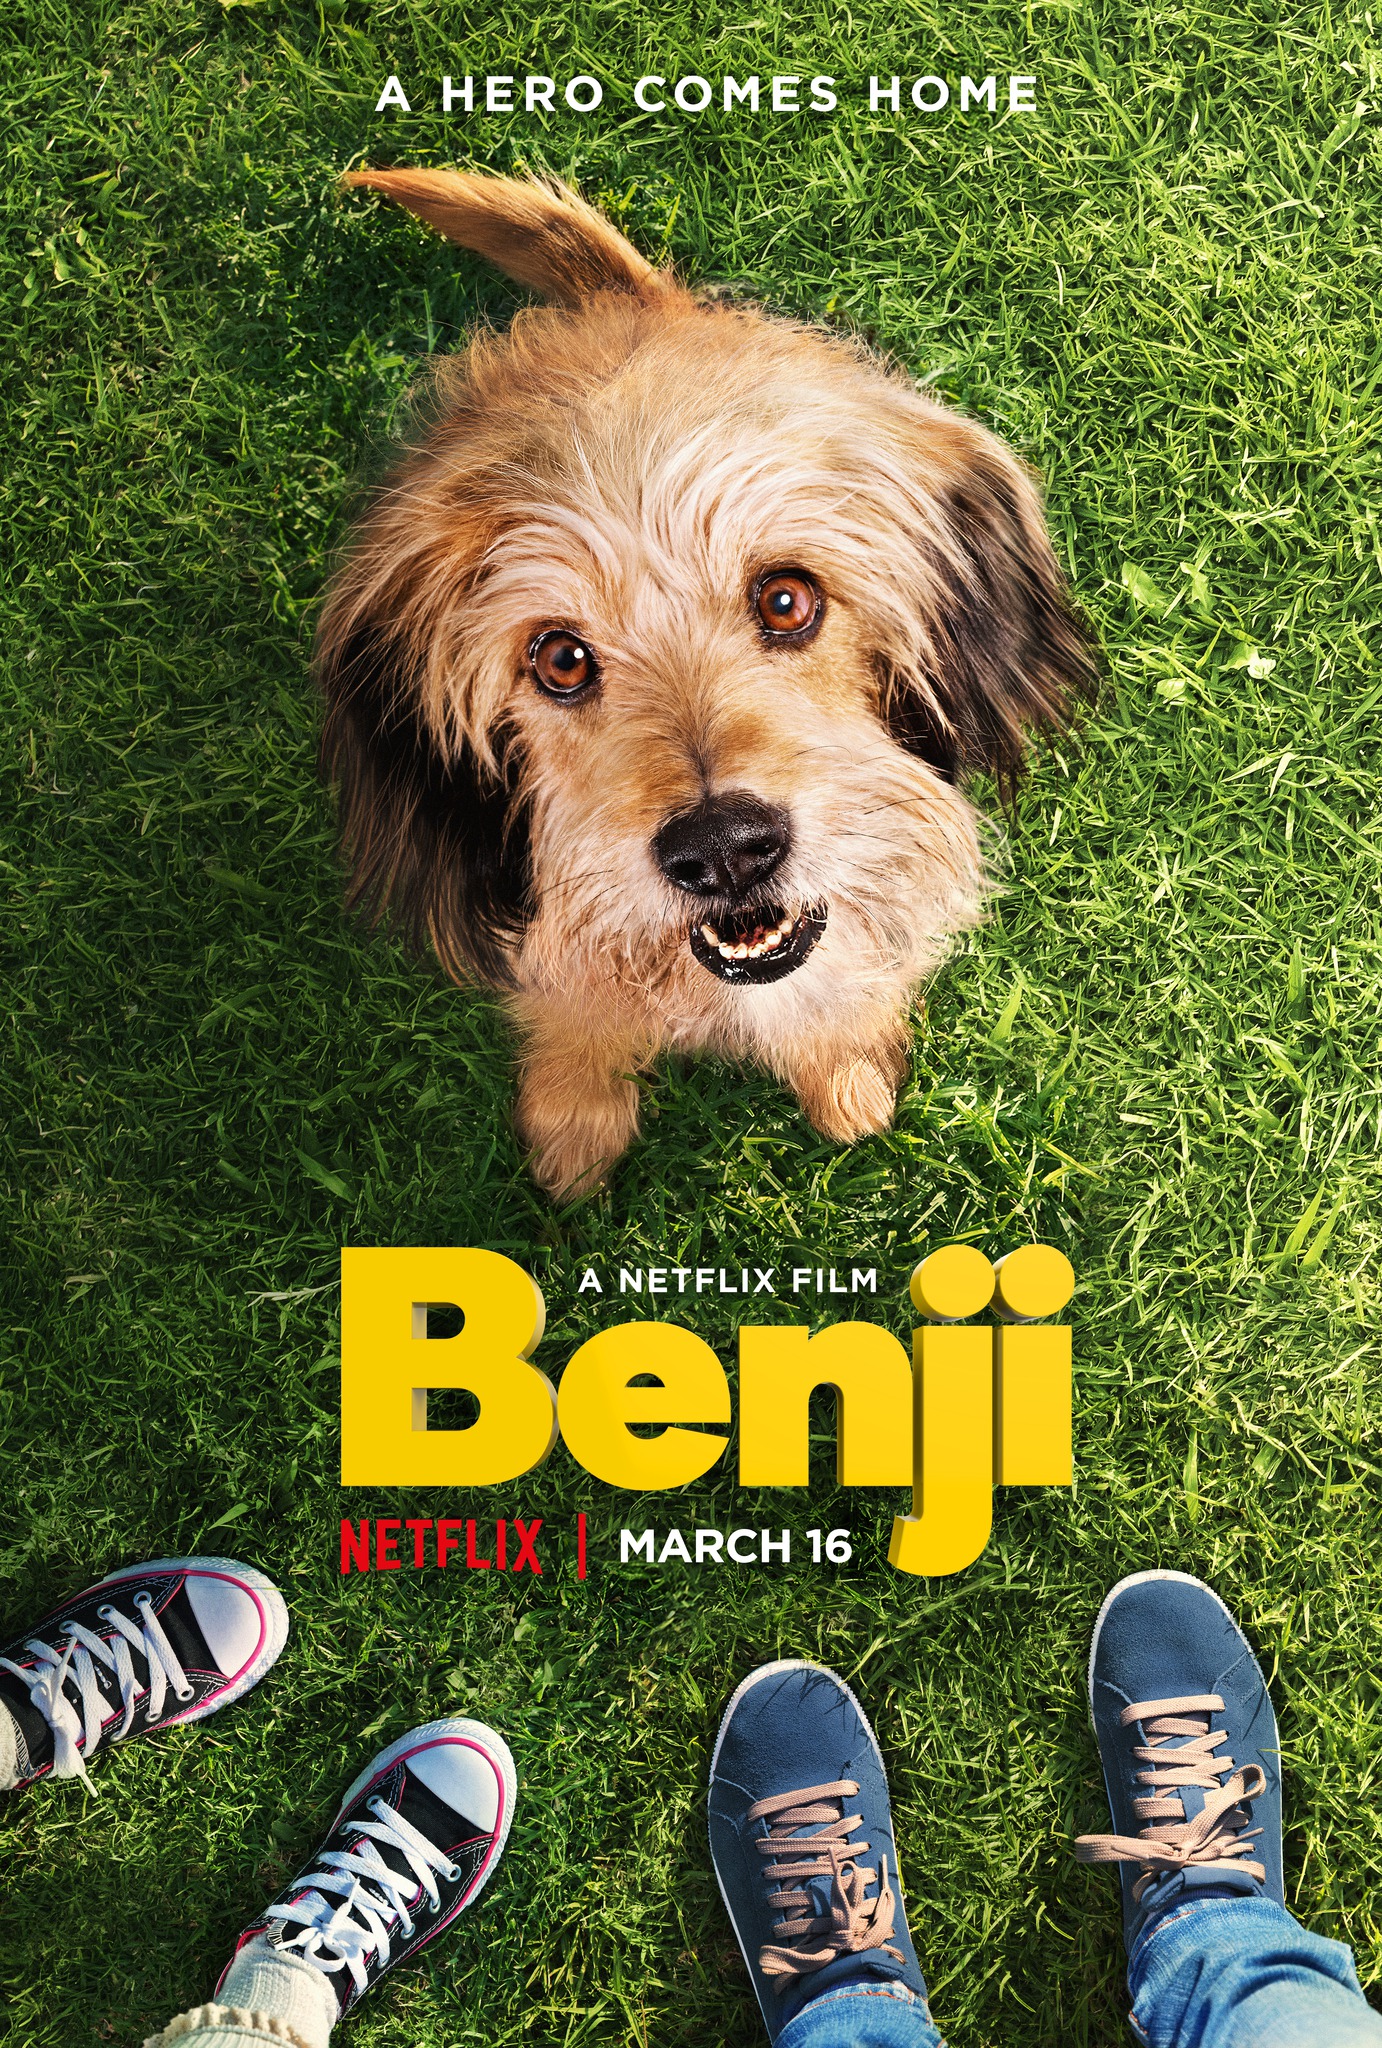 Mega Sized TV Poster Image for Benji 